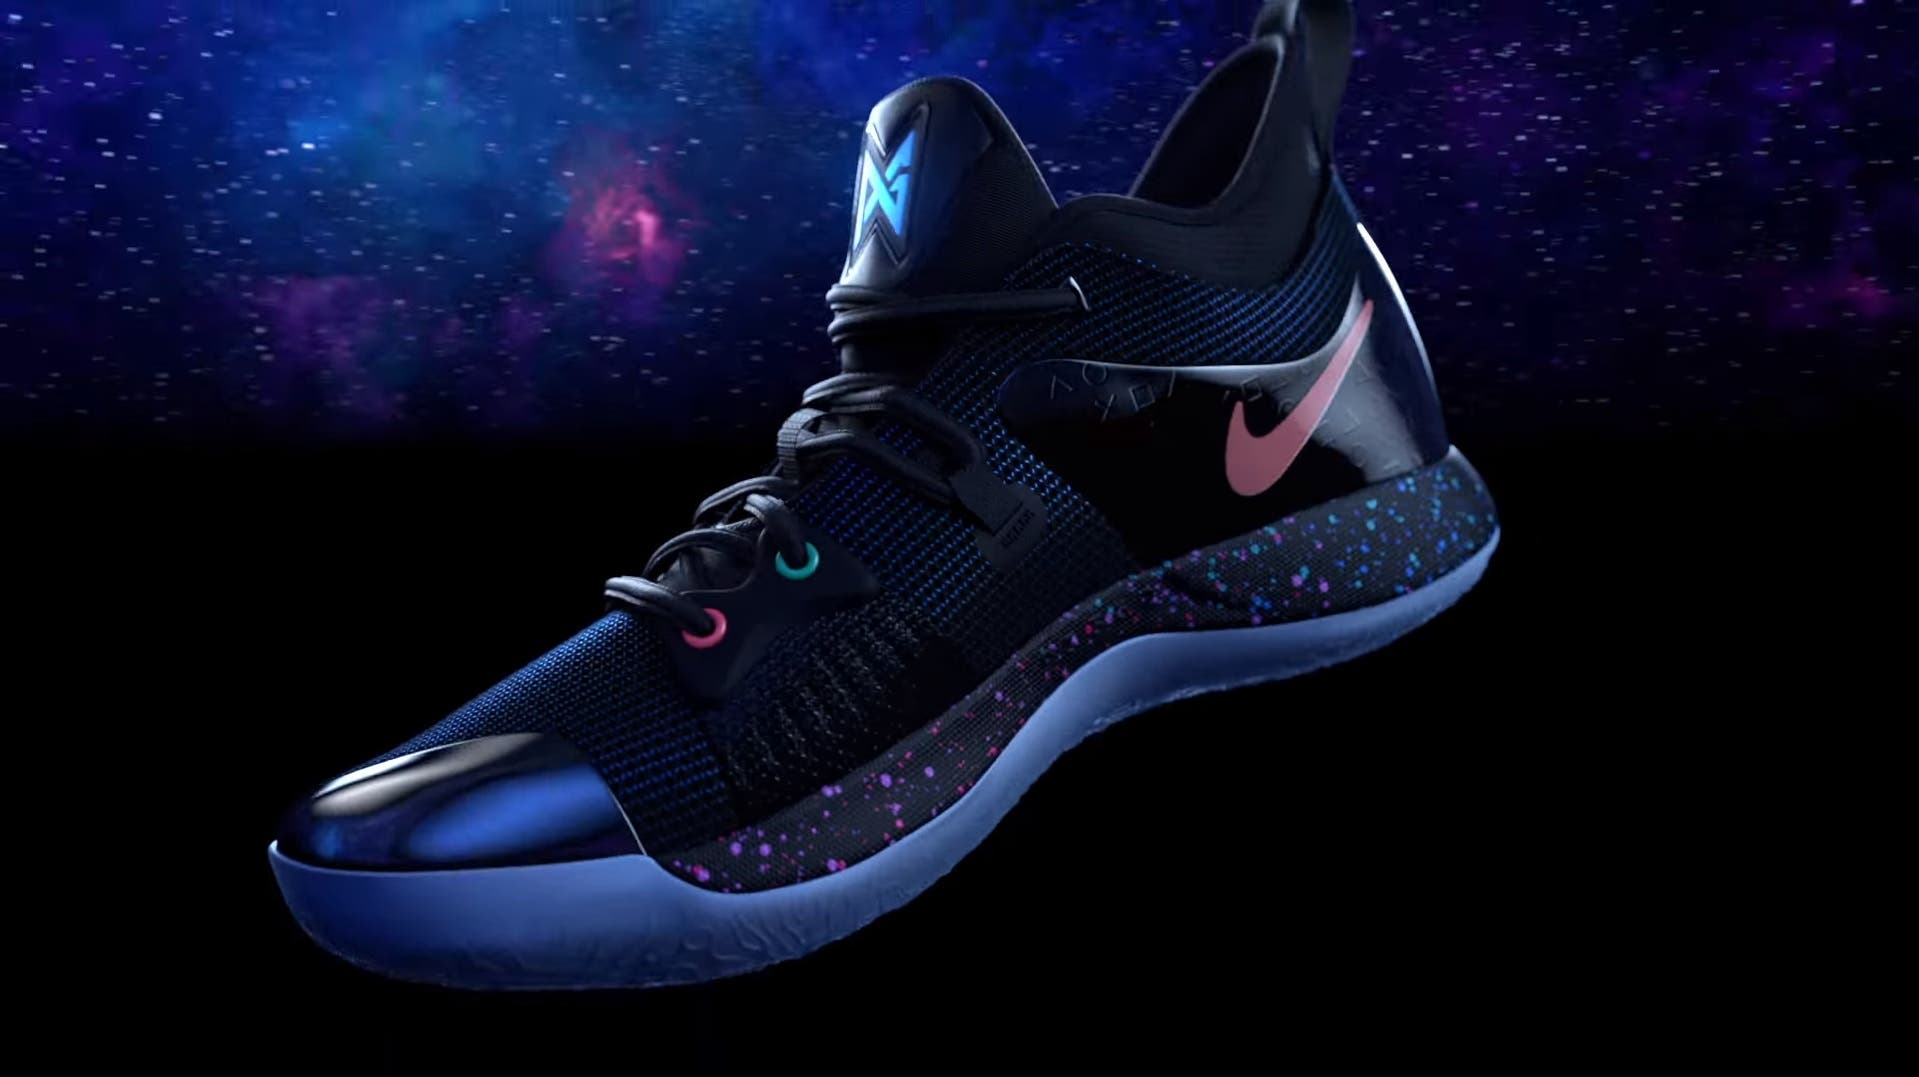 Frente a ti guisante Anguila Paul George y PlayStation anuncian las Nike PG-2 “PlayStation” Colorway